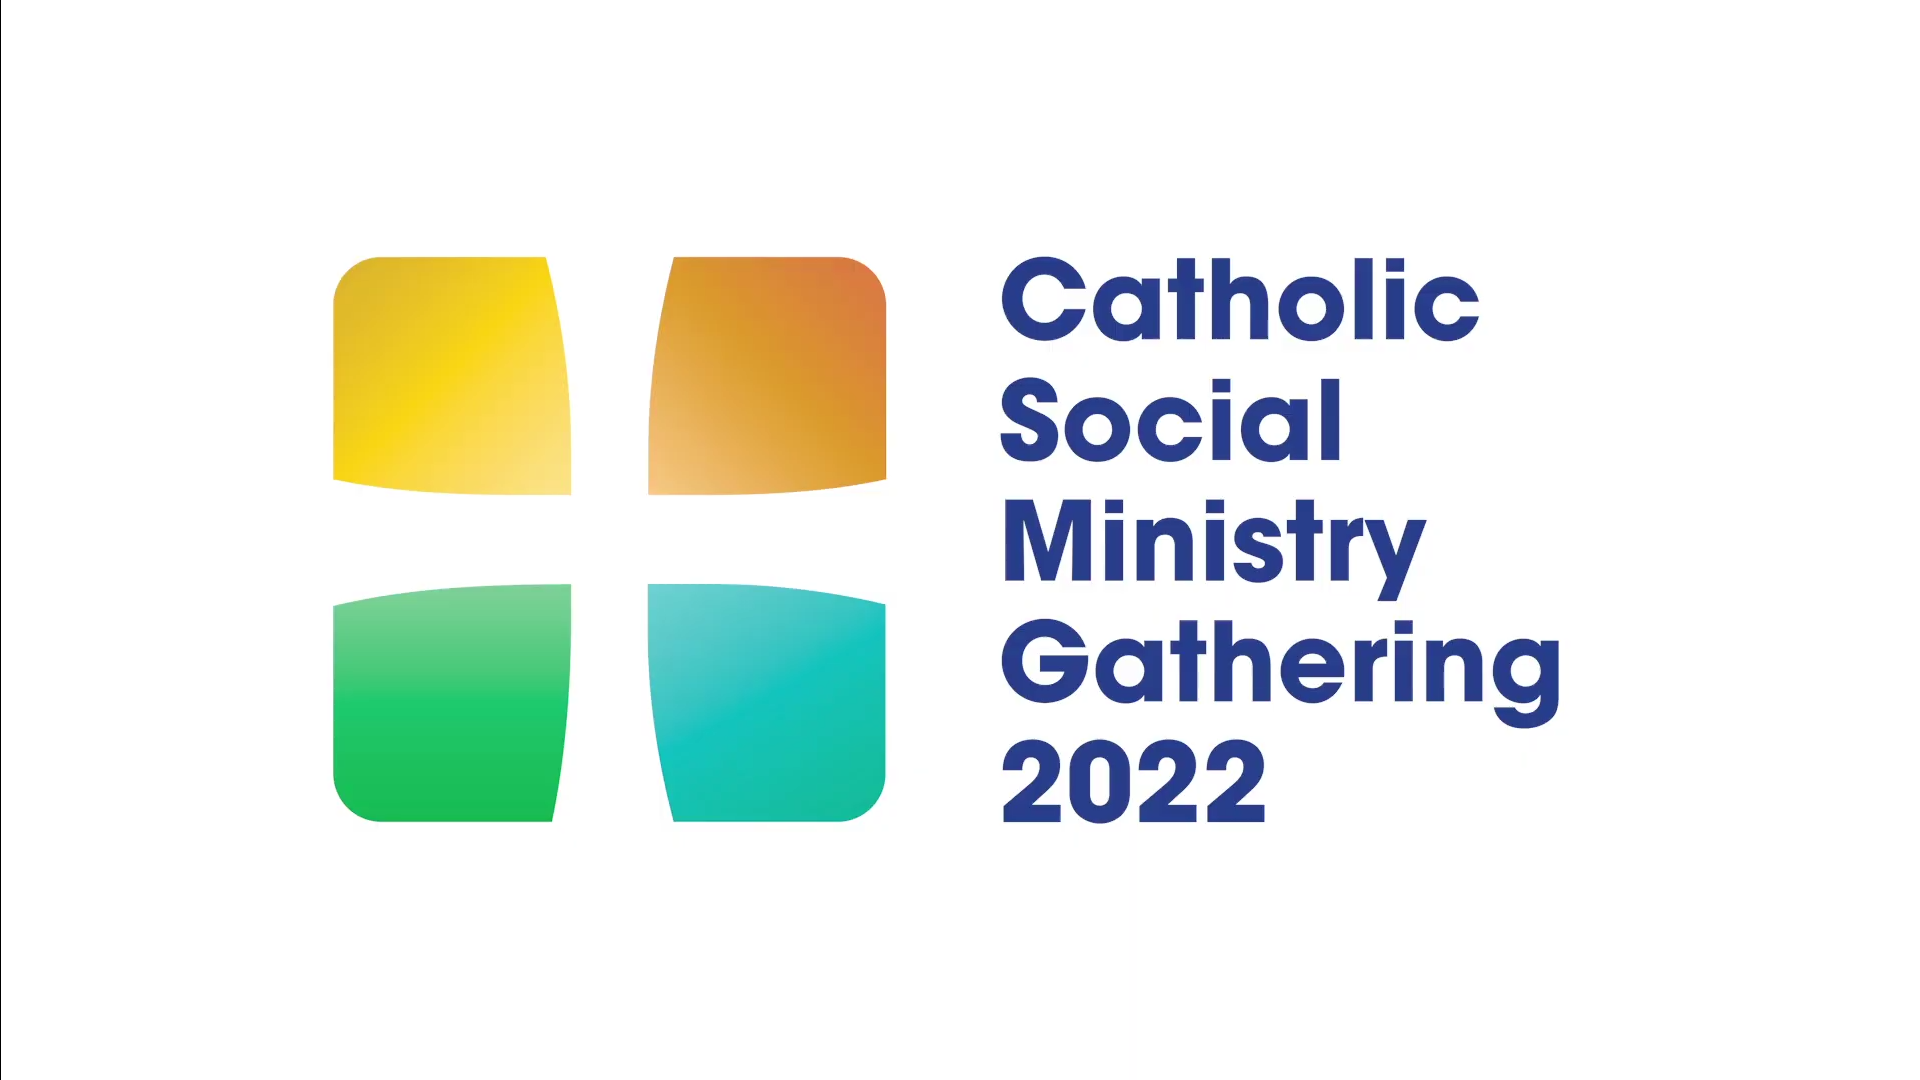 2022 Catholic Social Ministry Gathering going virtual January 29th-February 1st